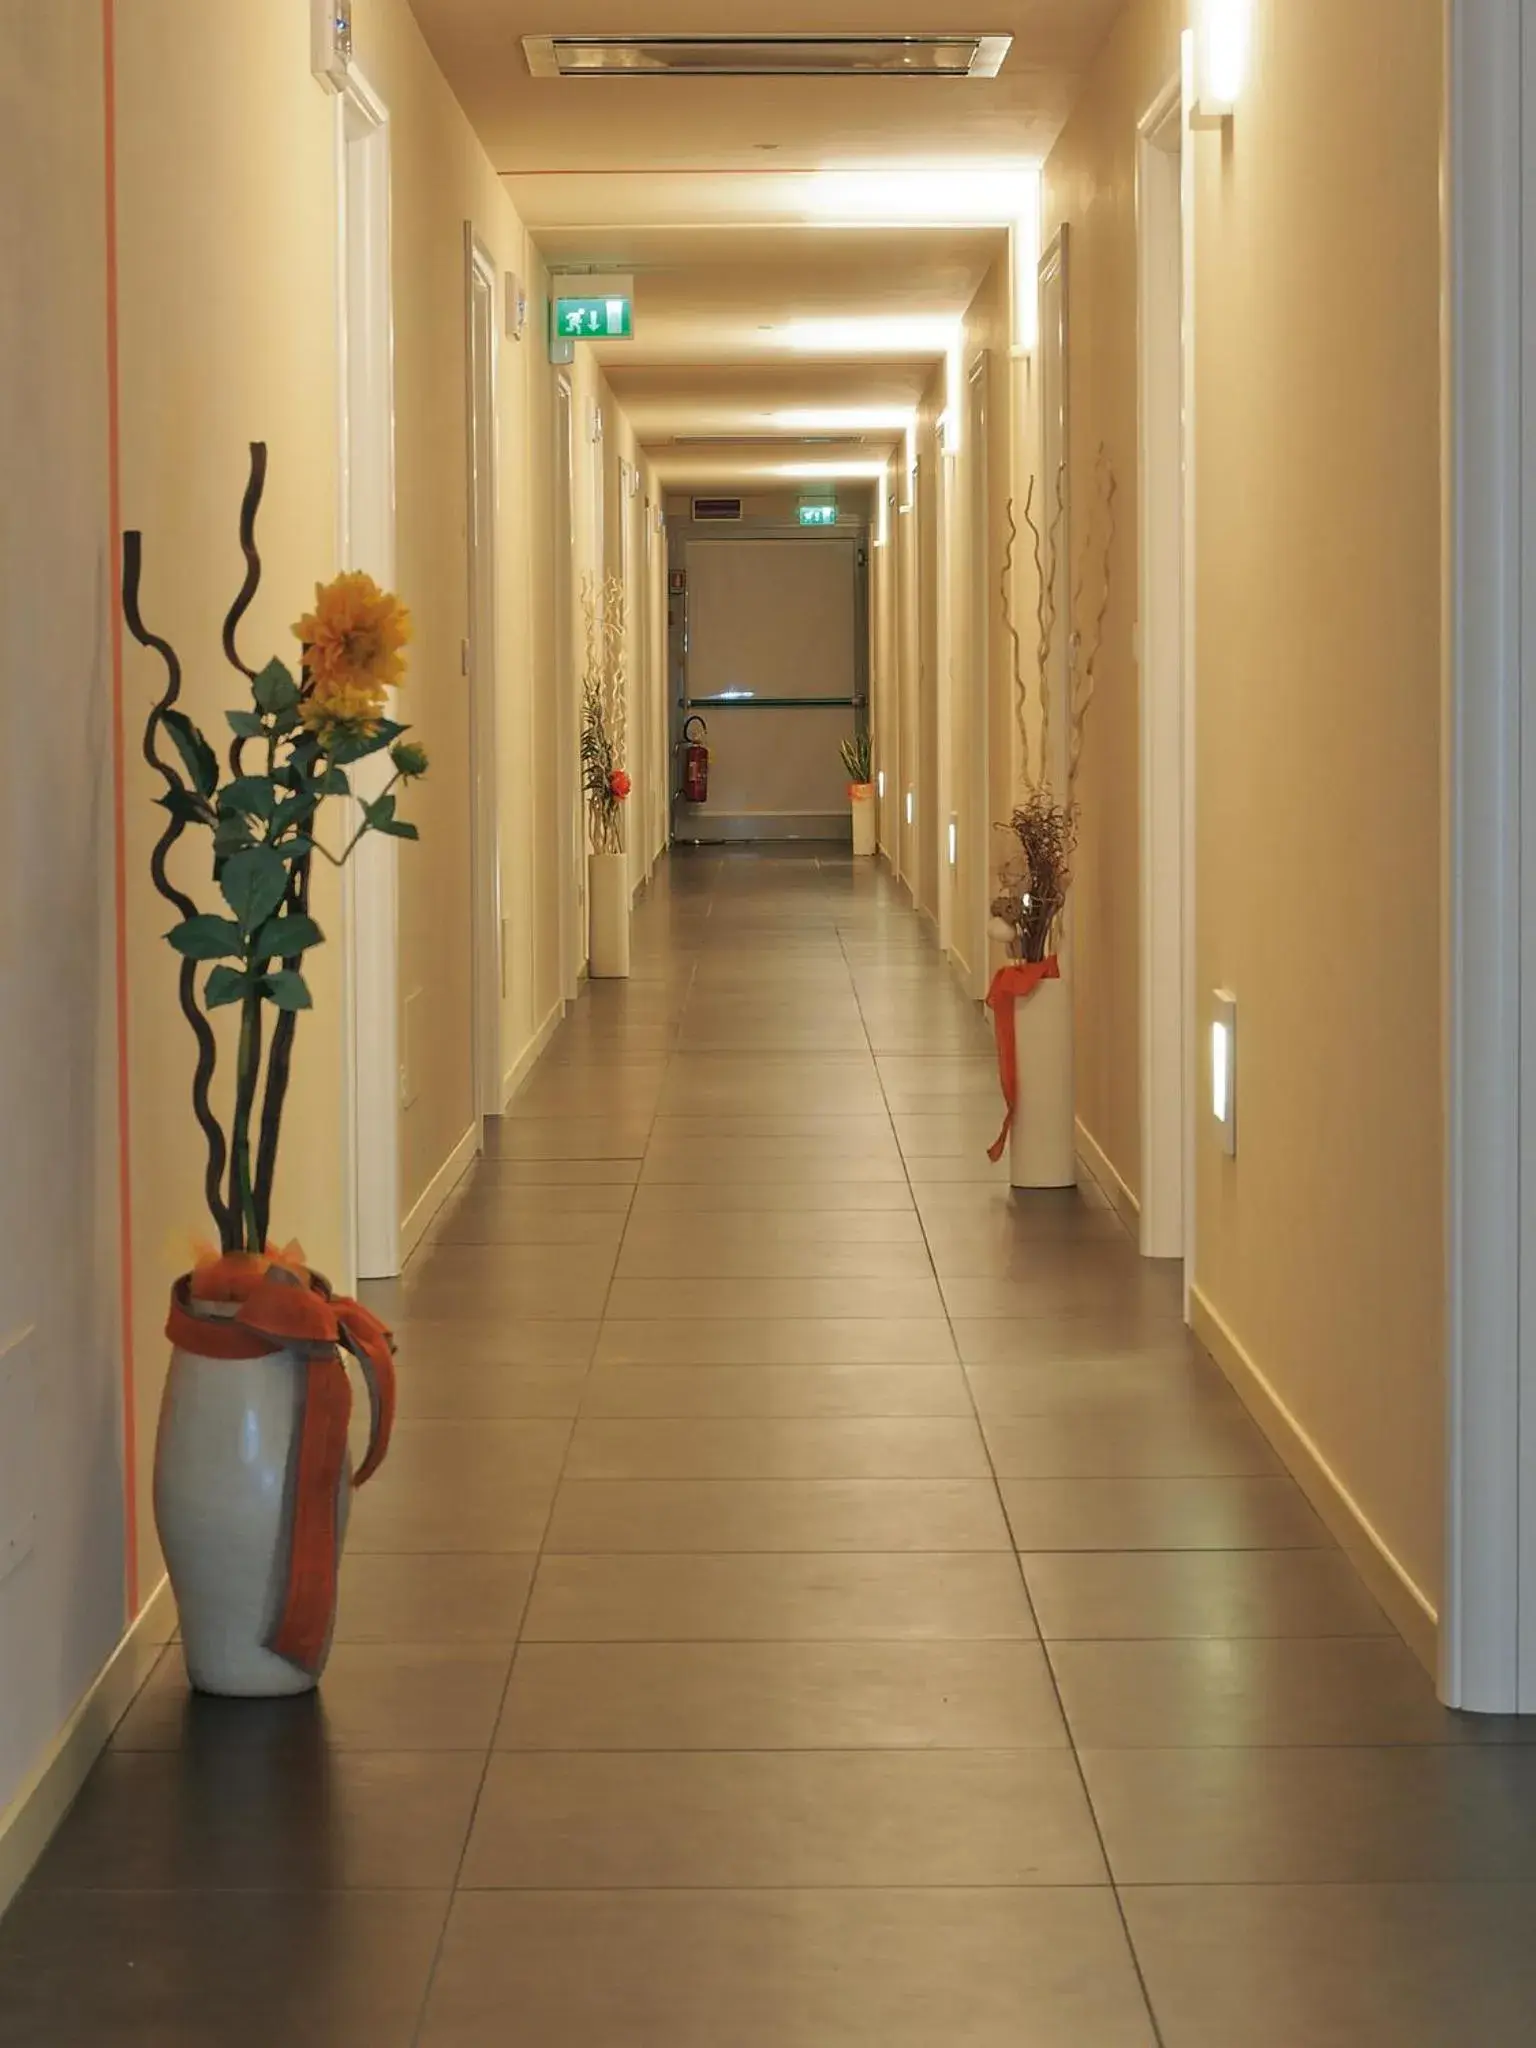 Area and facilities in Hotel Cluentum